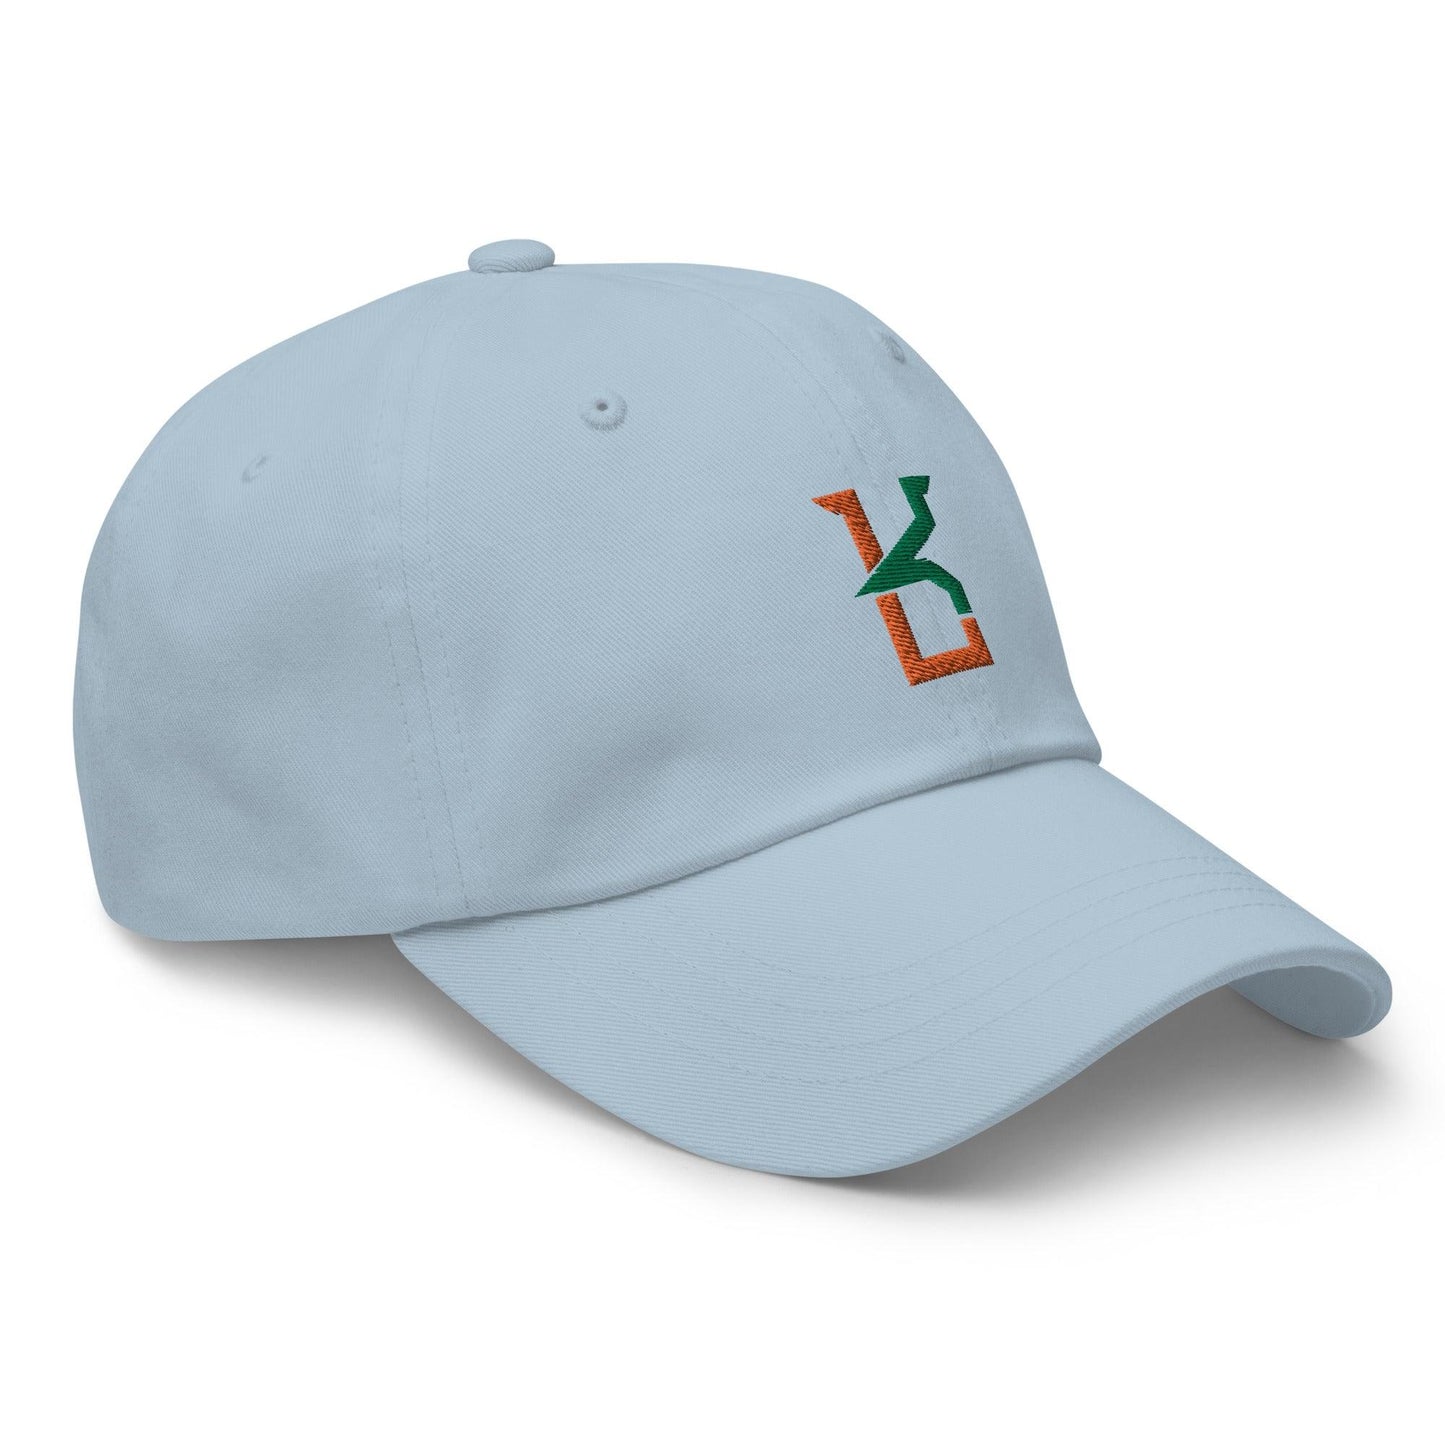 Karson Ligon "Signature" hat - Fan Arch